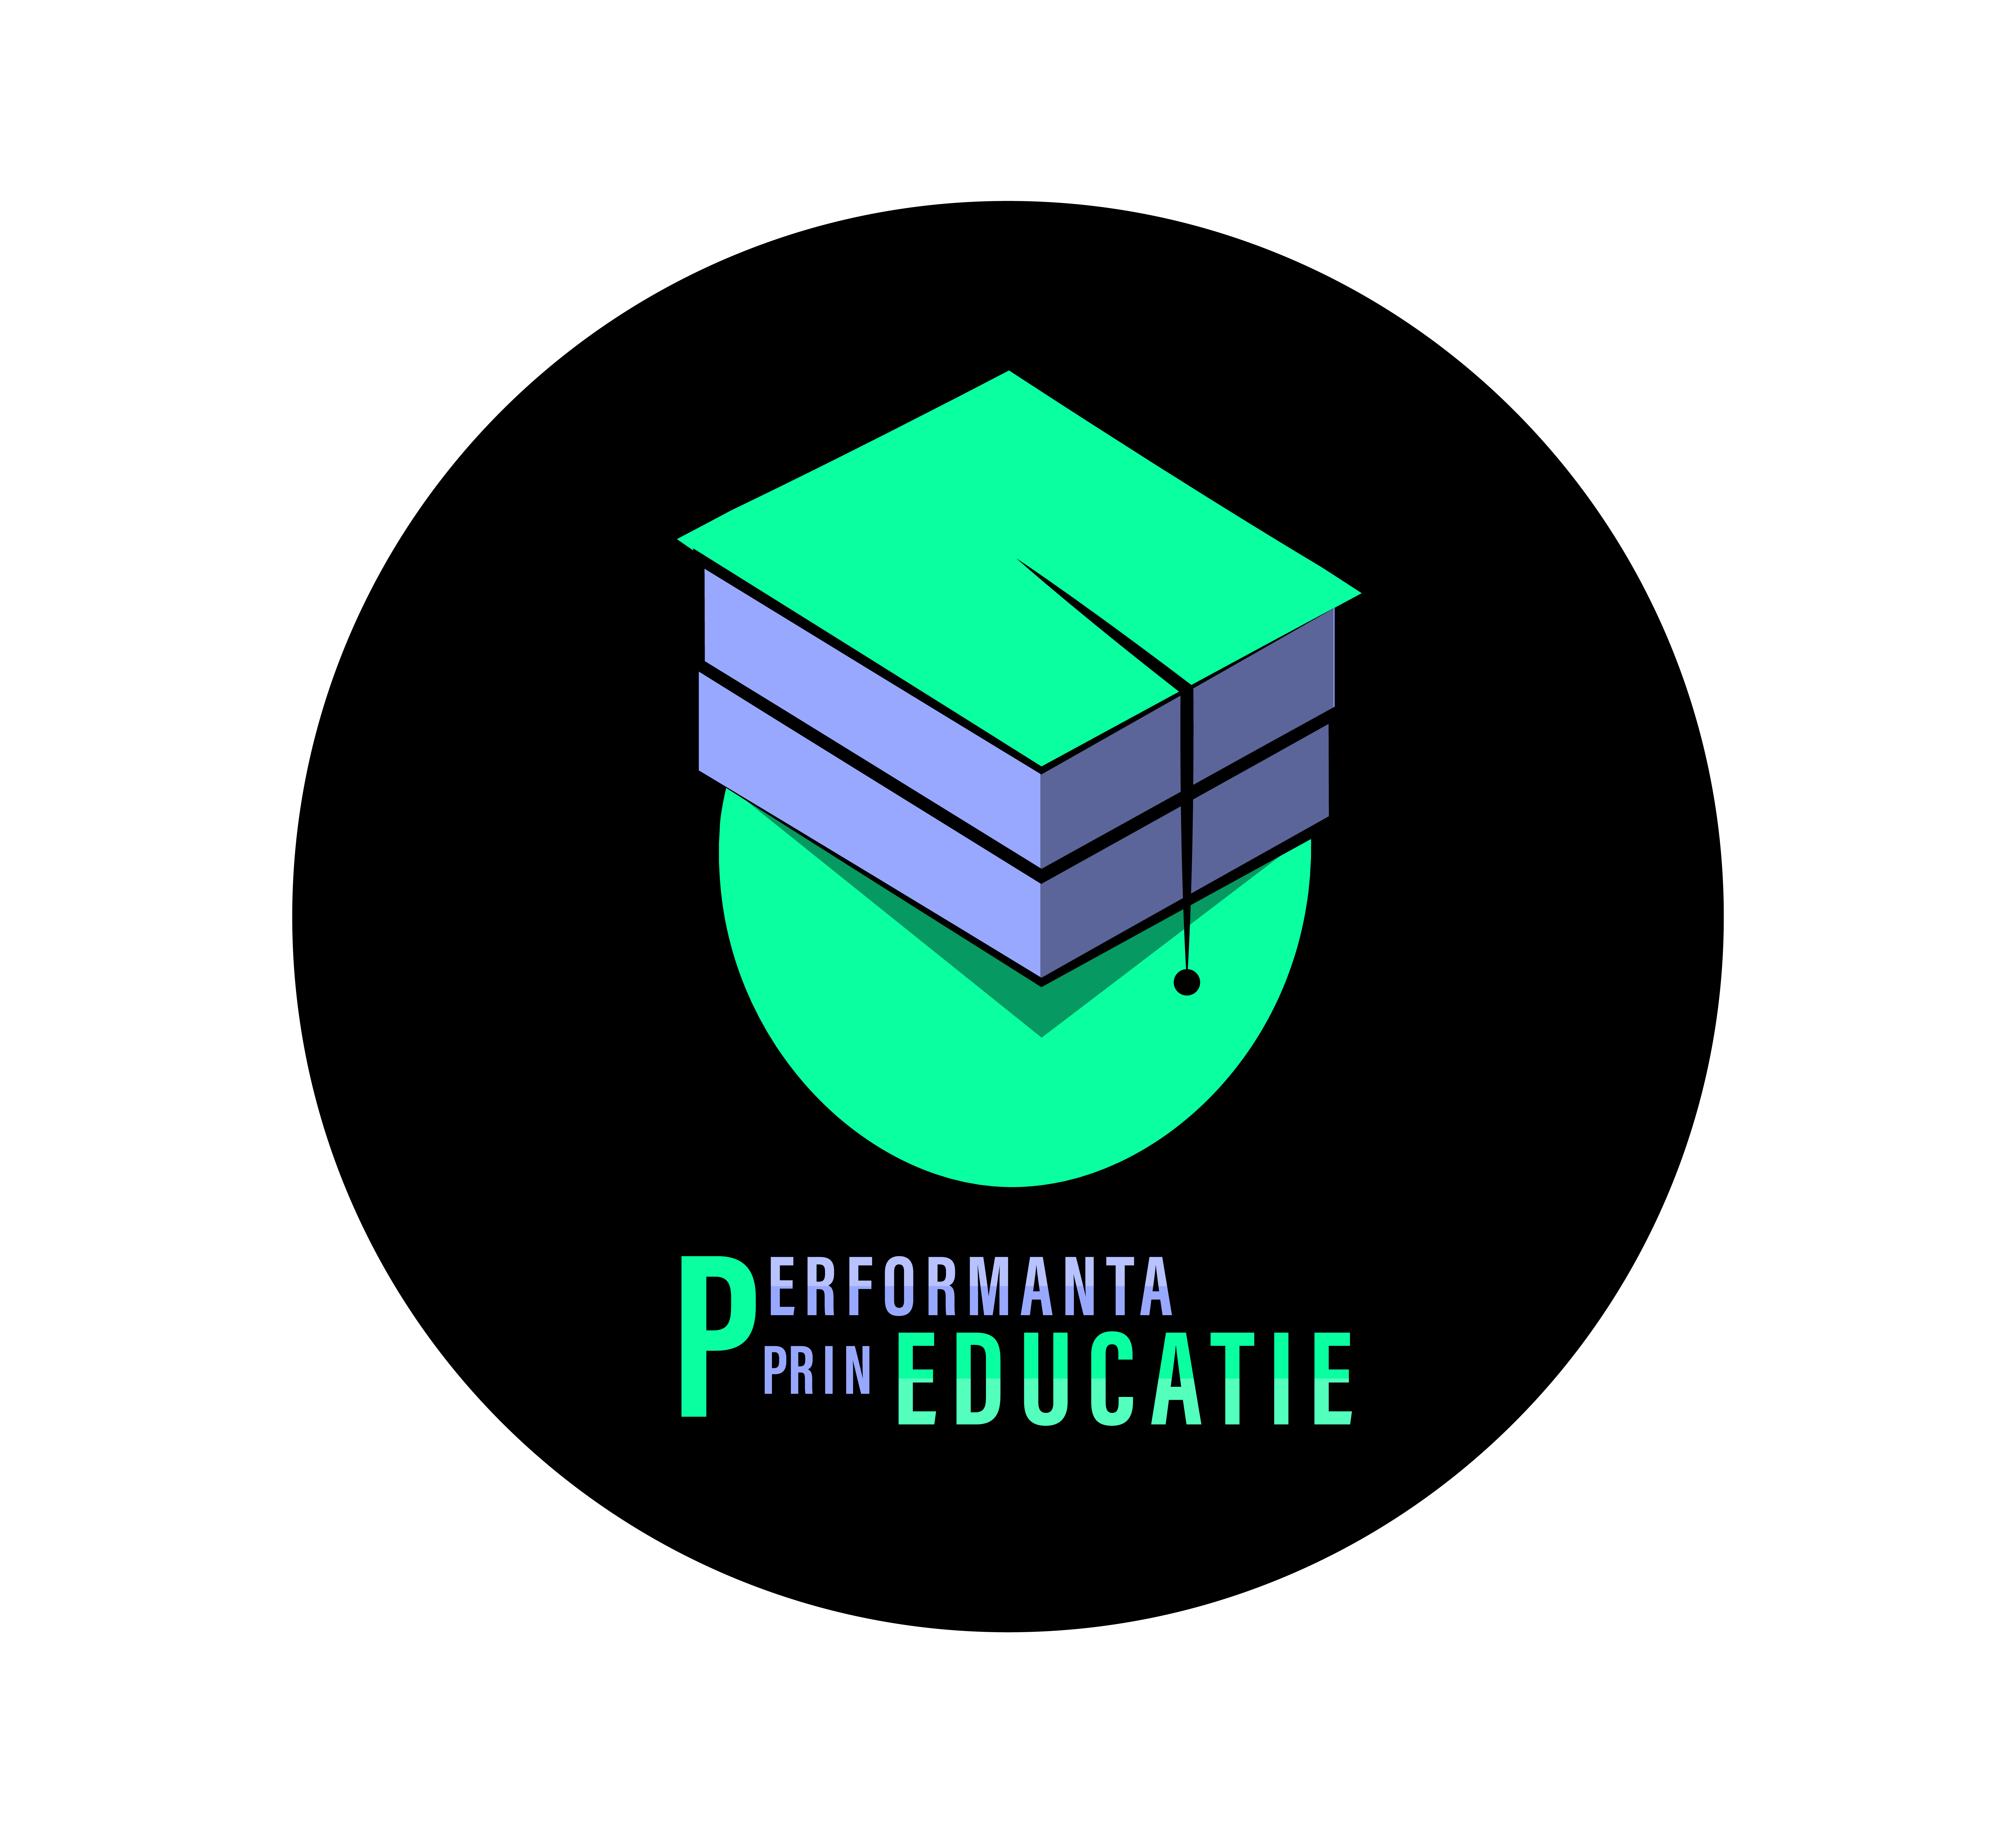 Performanta prin educatie logo